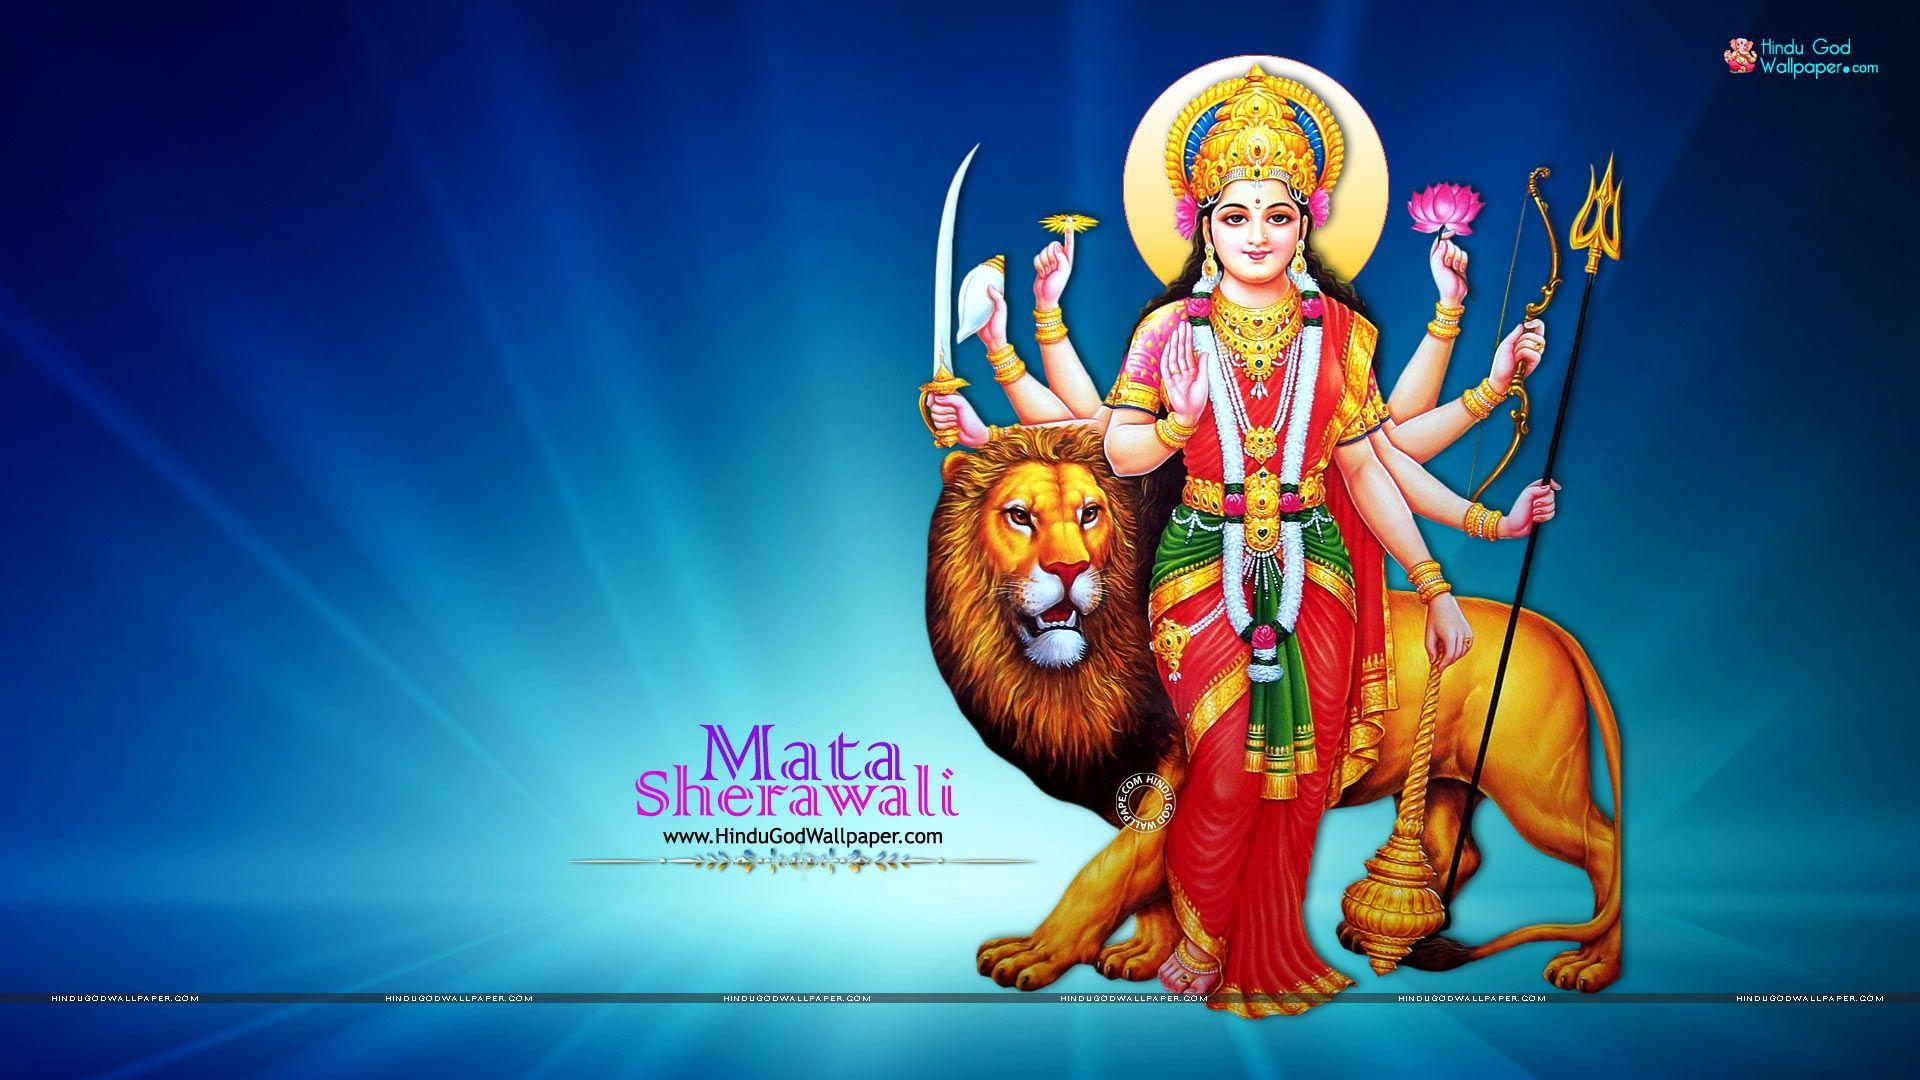 Sherawali Mata Durga Wallpaper HD Full Size Download. Durga image, Wallpaper free download, Navratri image